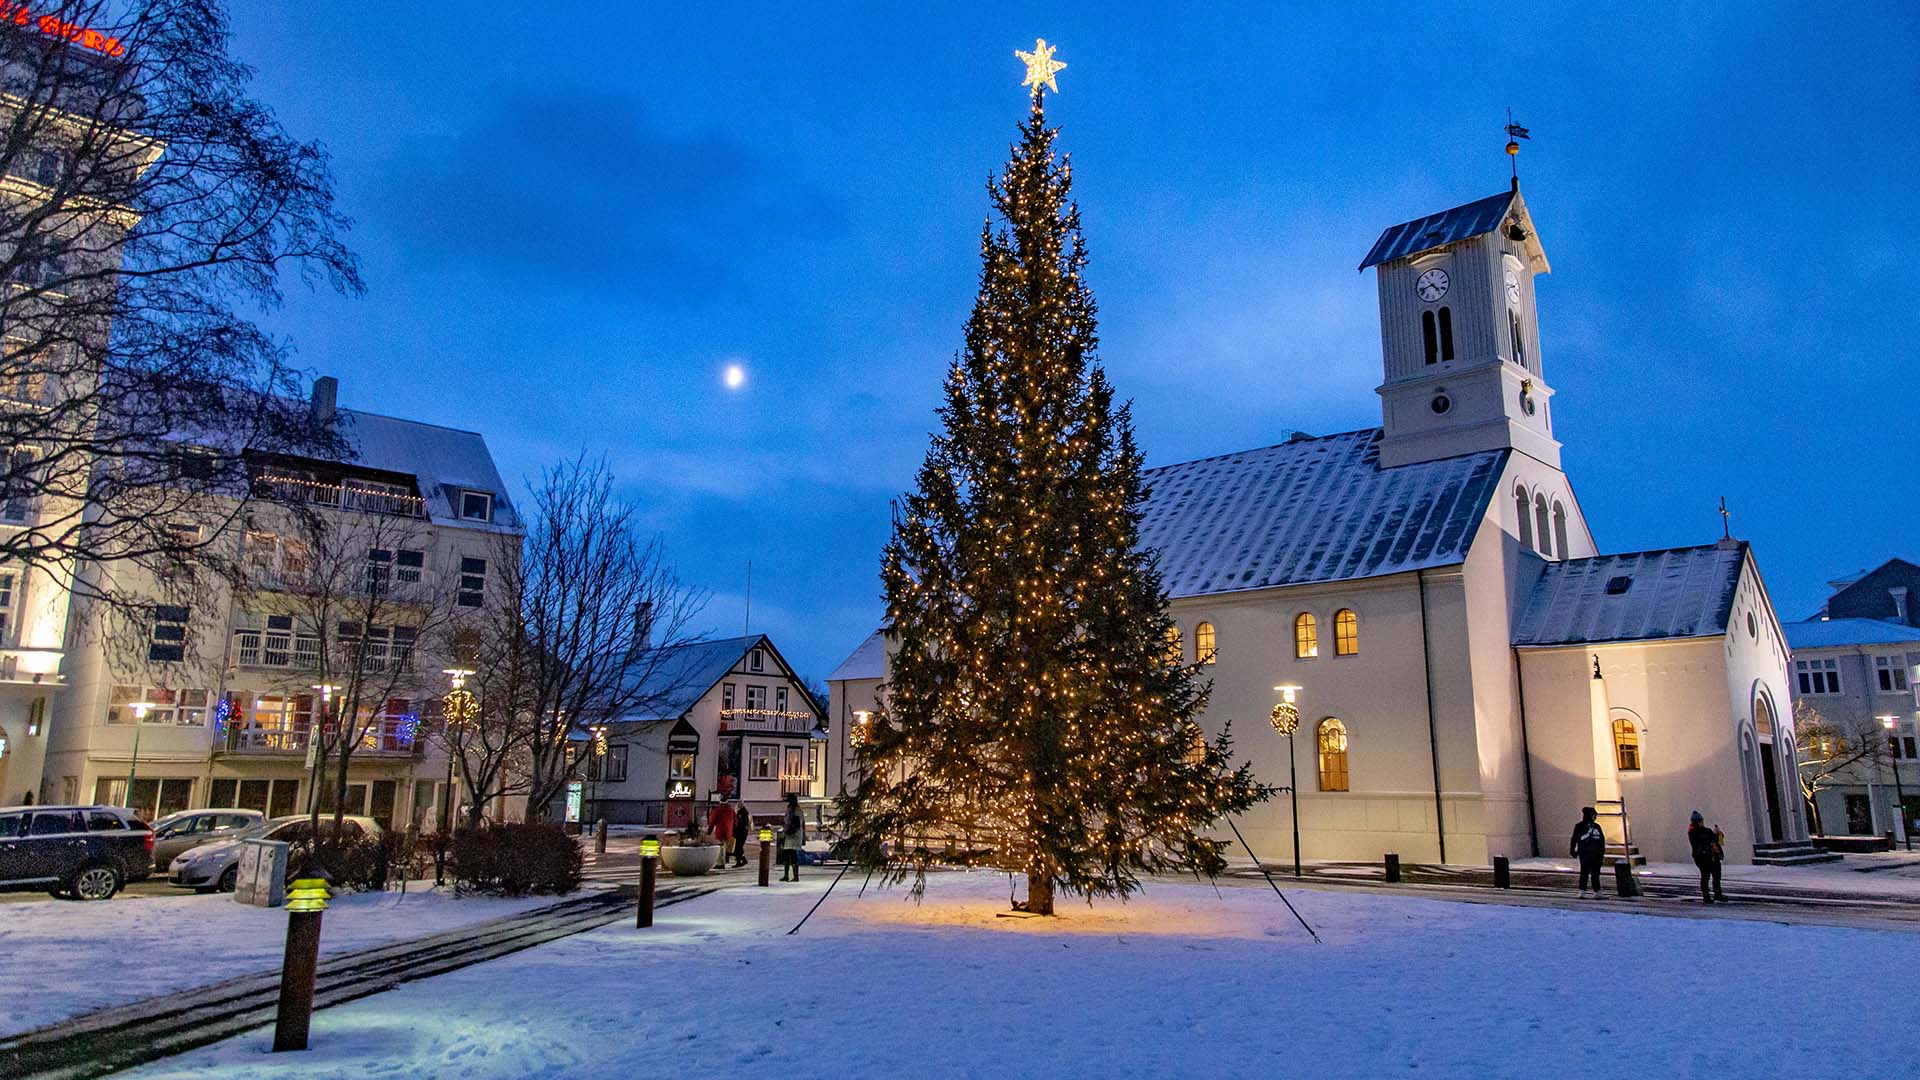 Christmas tree in Austurvöllur, downtown Reykjavik ©nordicvisitor